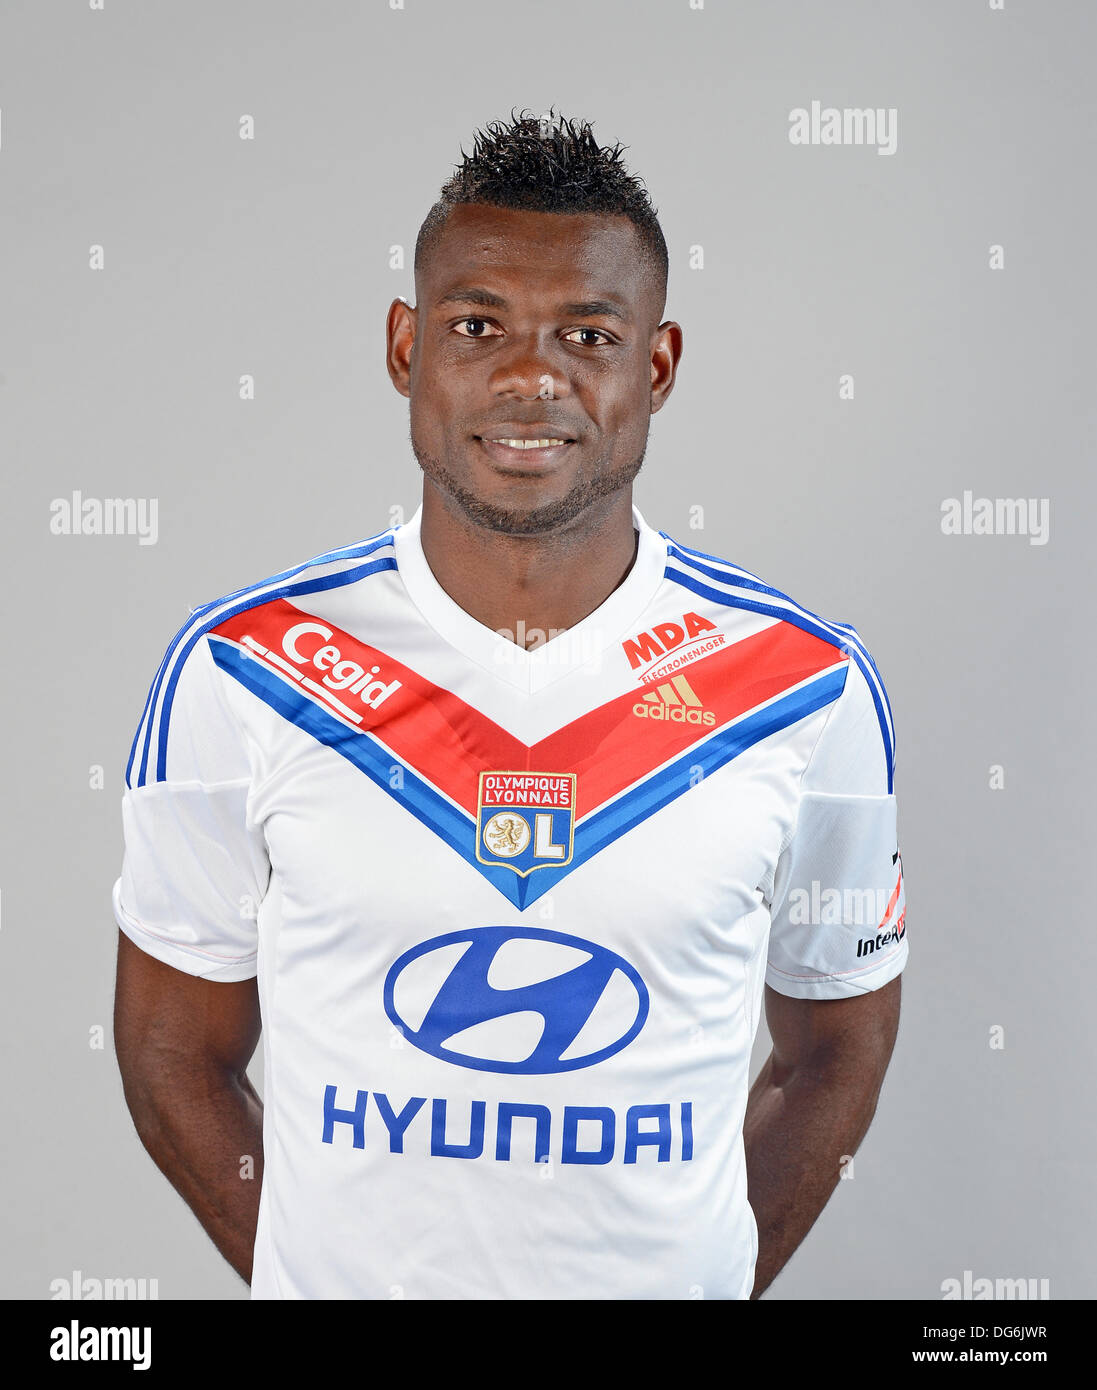 15.10.2013. French League 1 football team Lyon, official photoshoot portraits for season 2013-14. HENRI BEDIMO Stock Photo